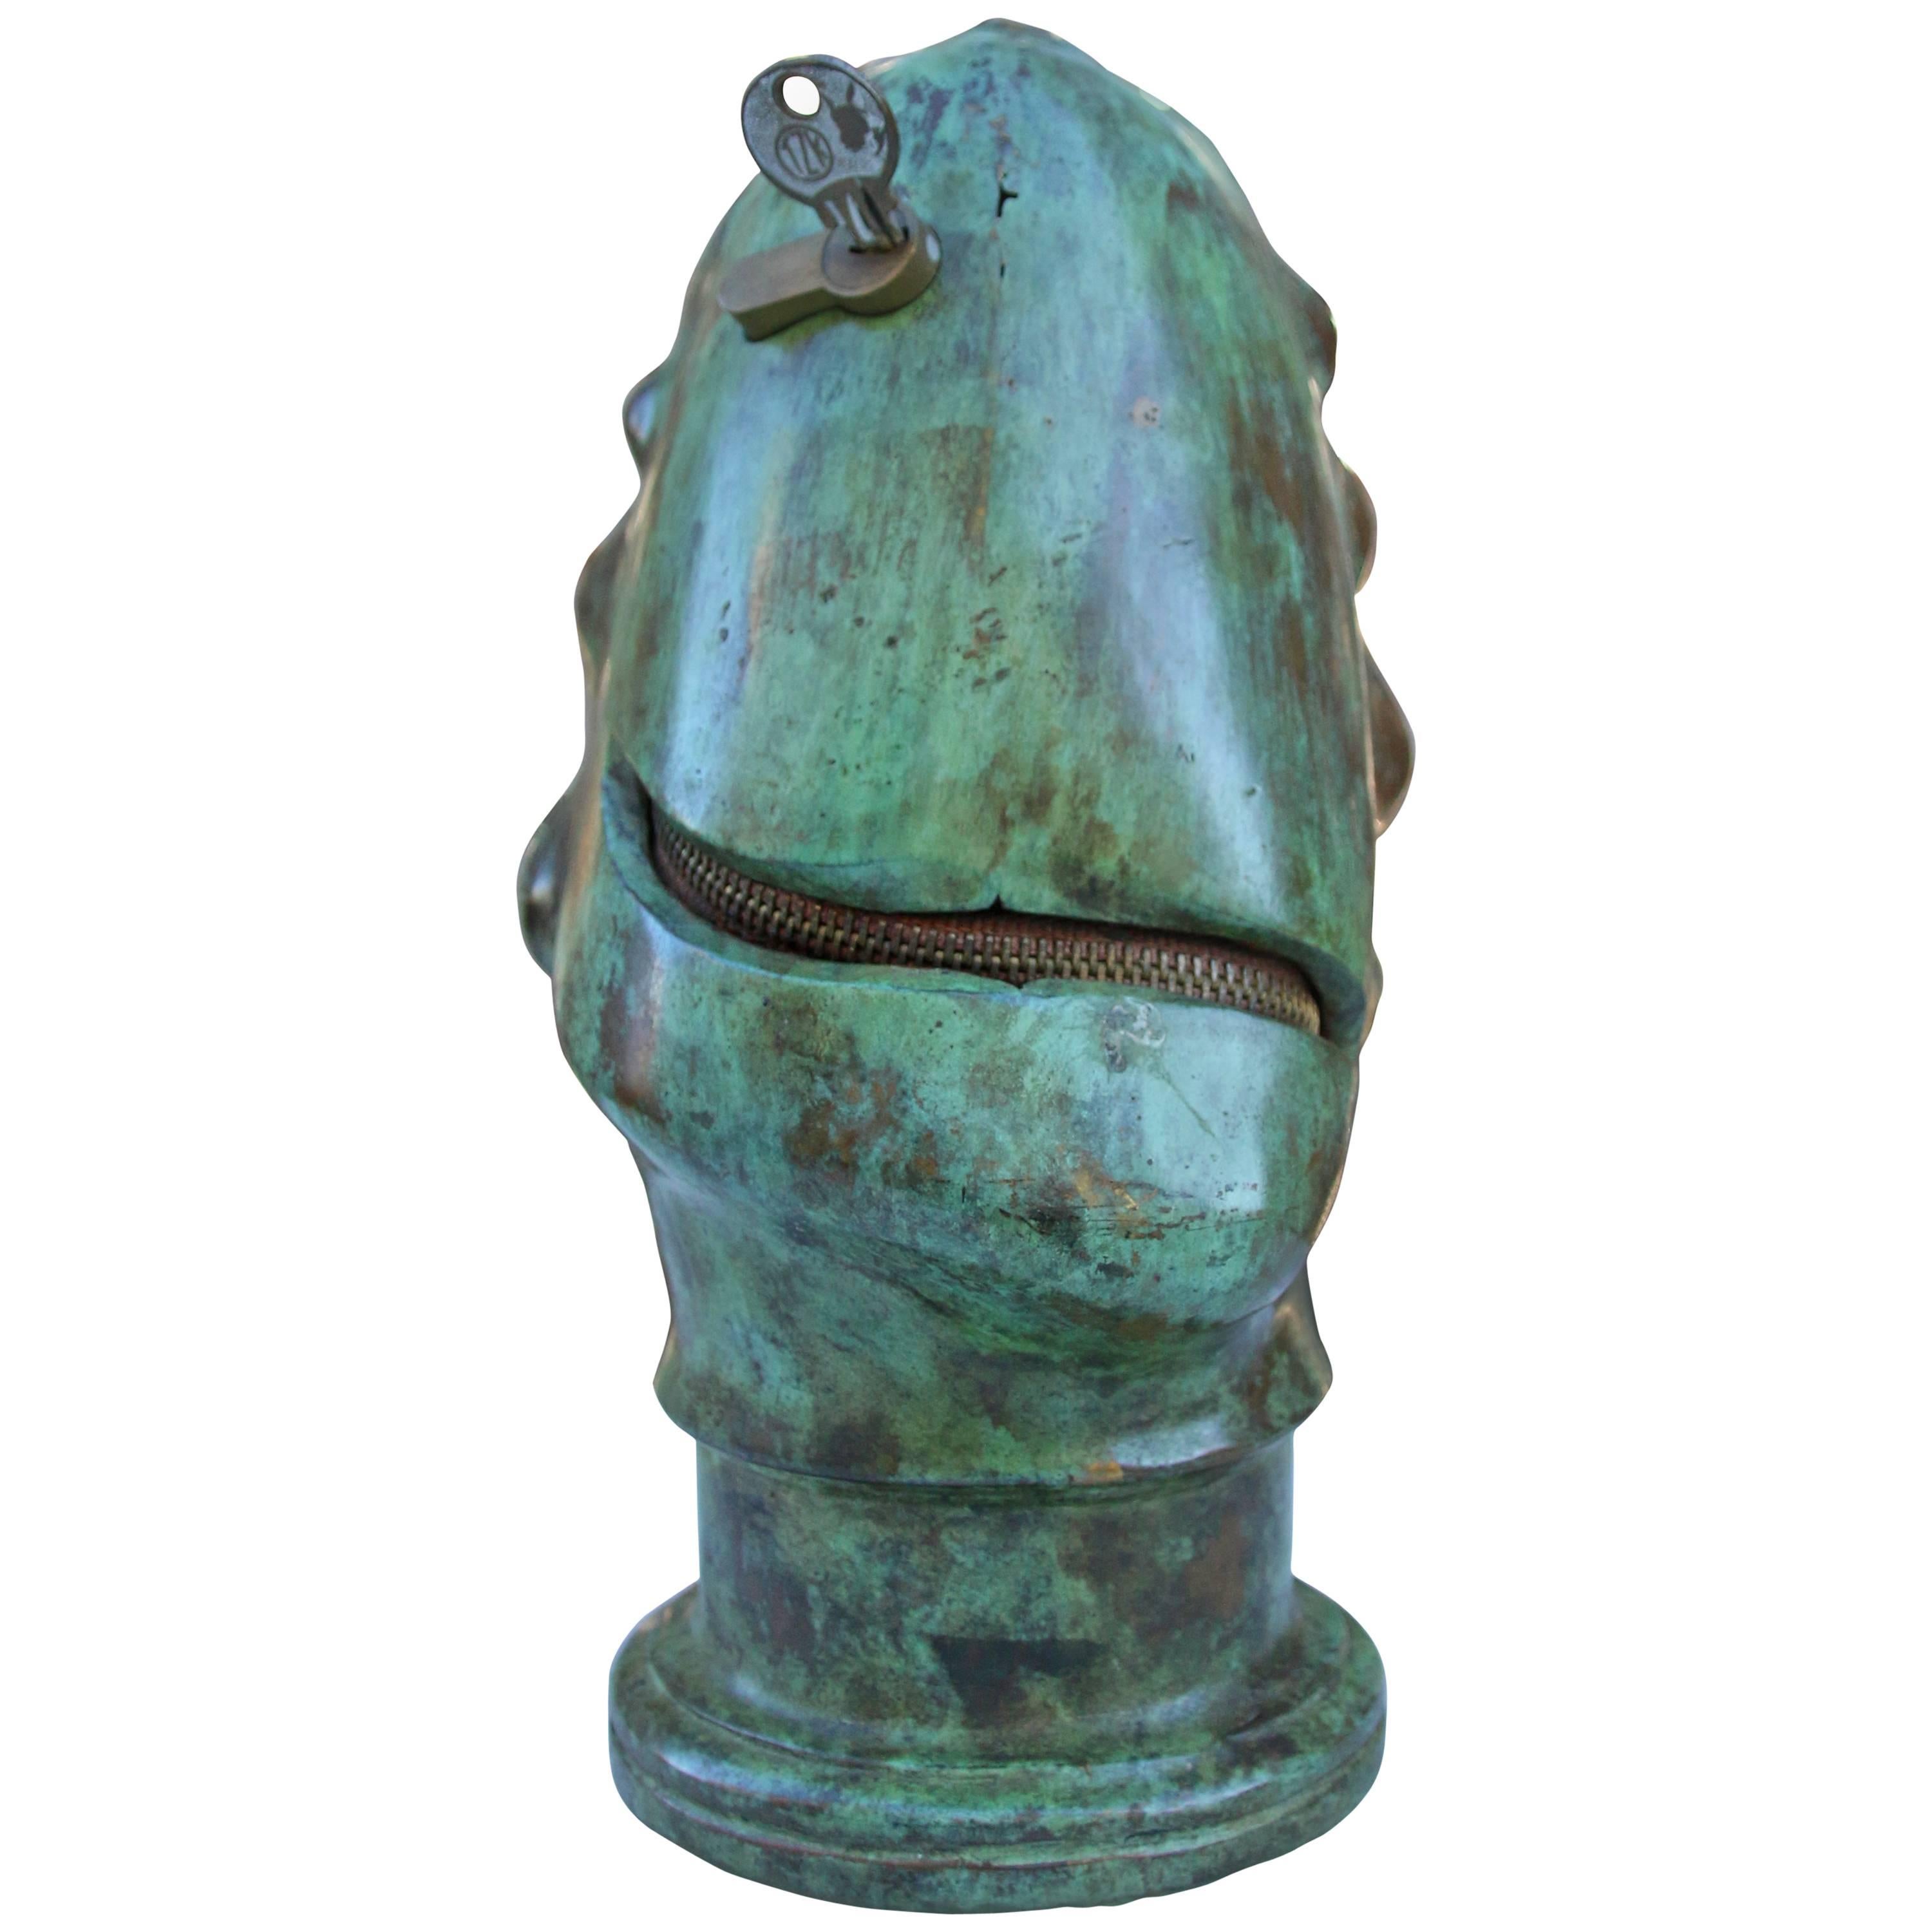 Bronze sculpture "Zipper Face" For Sale